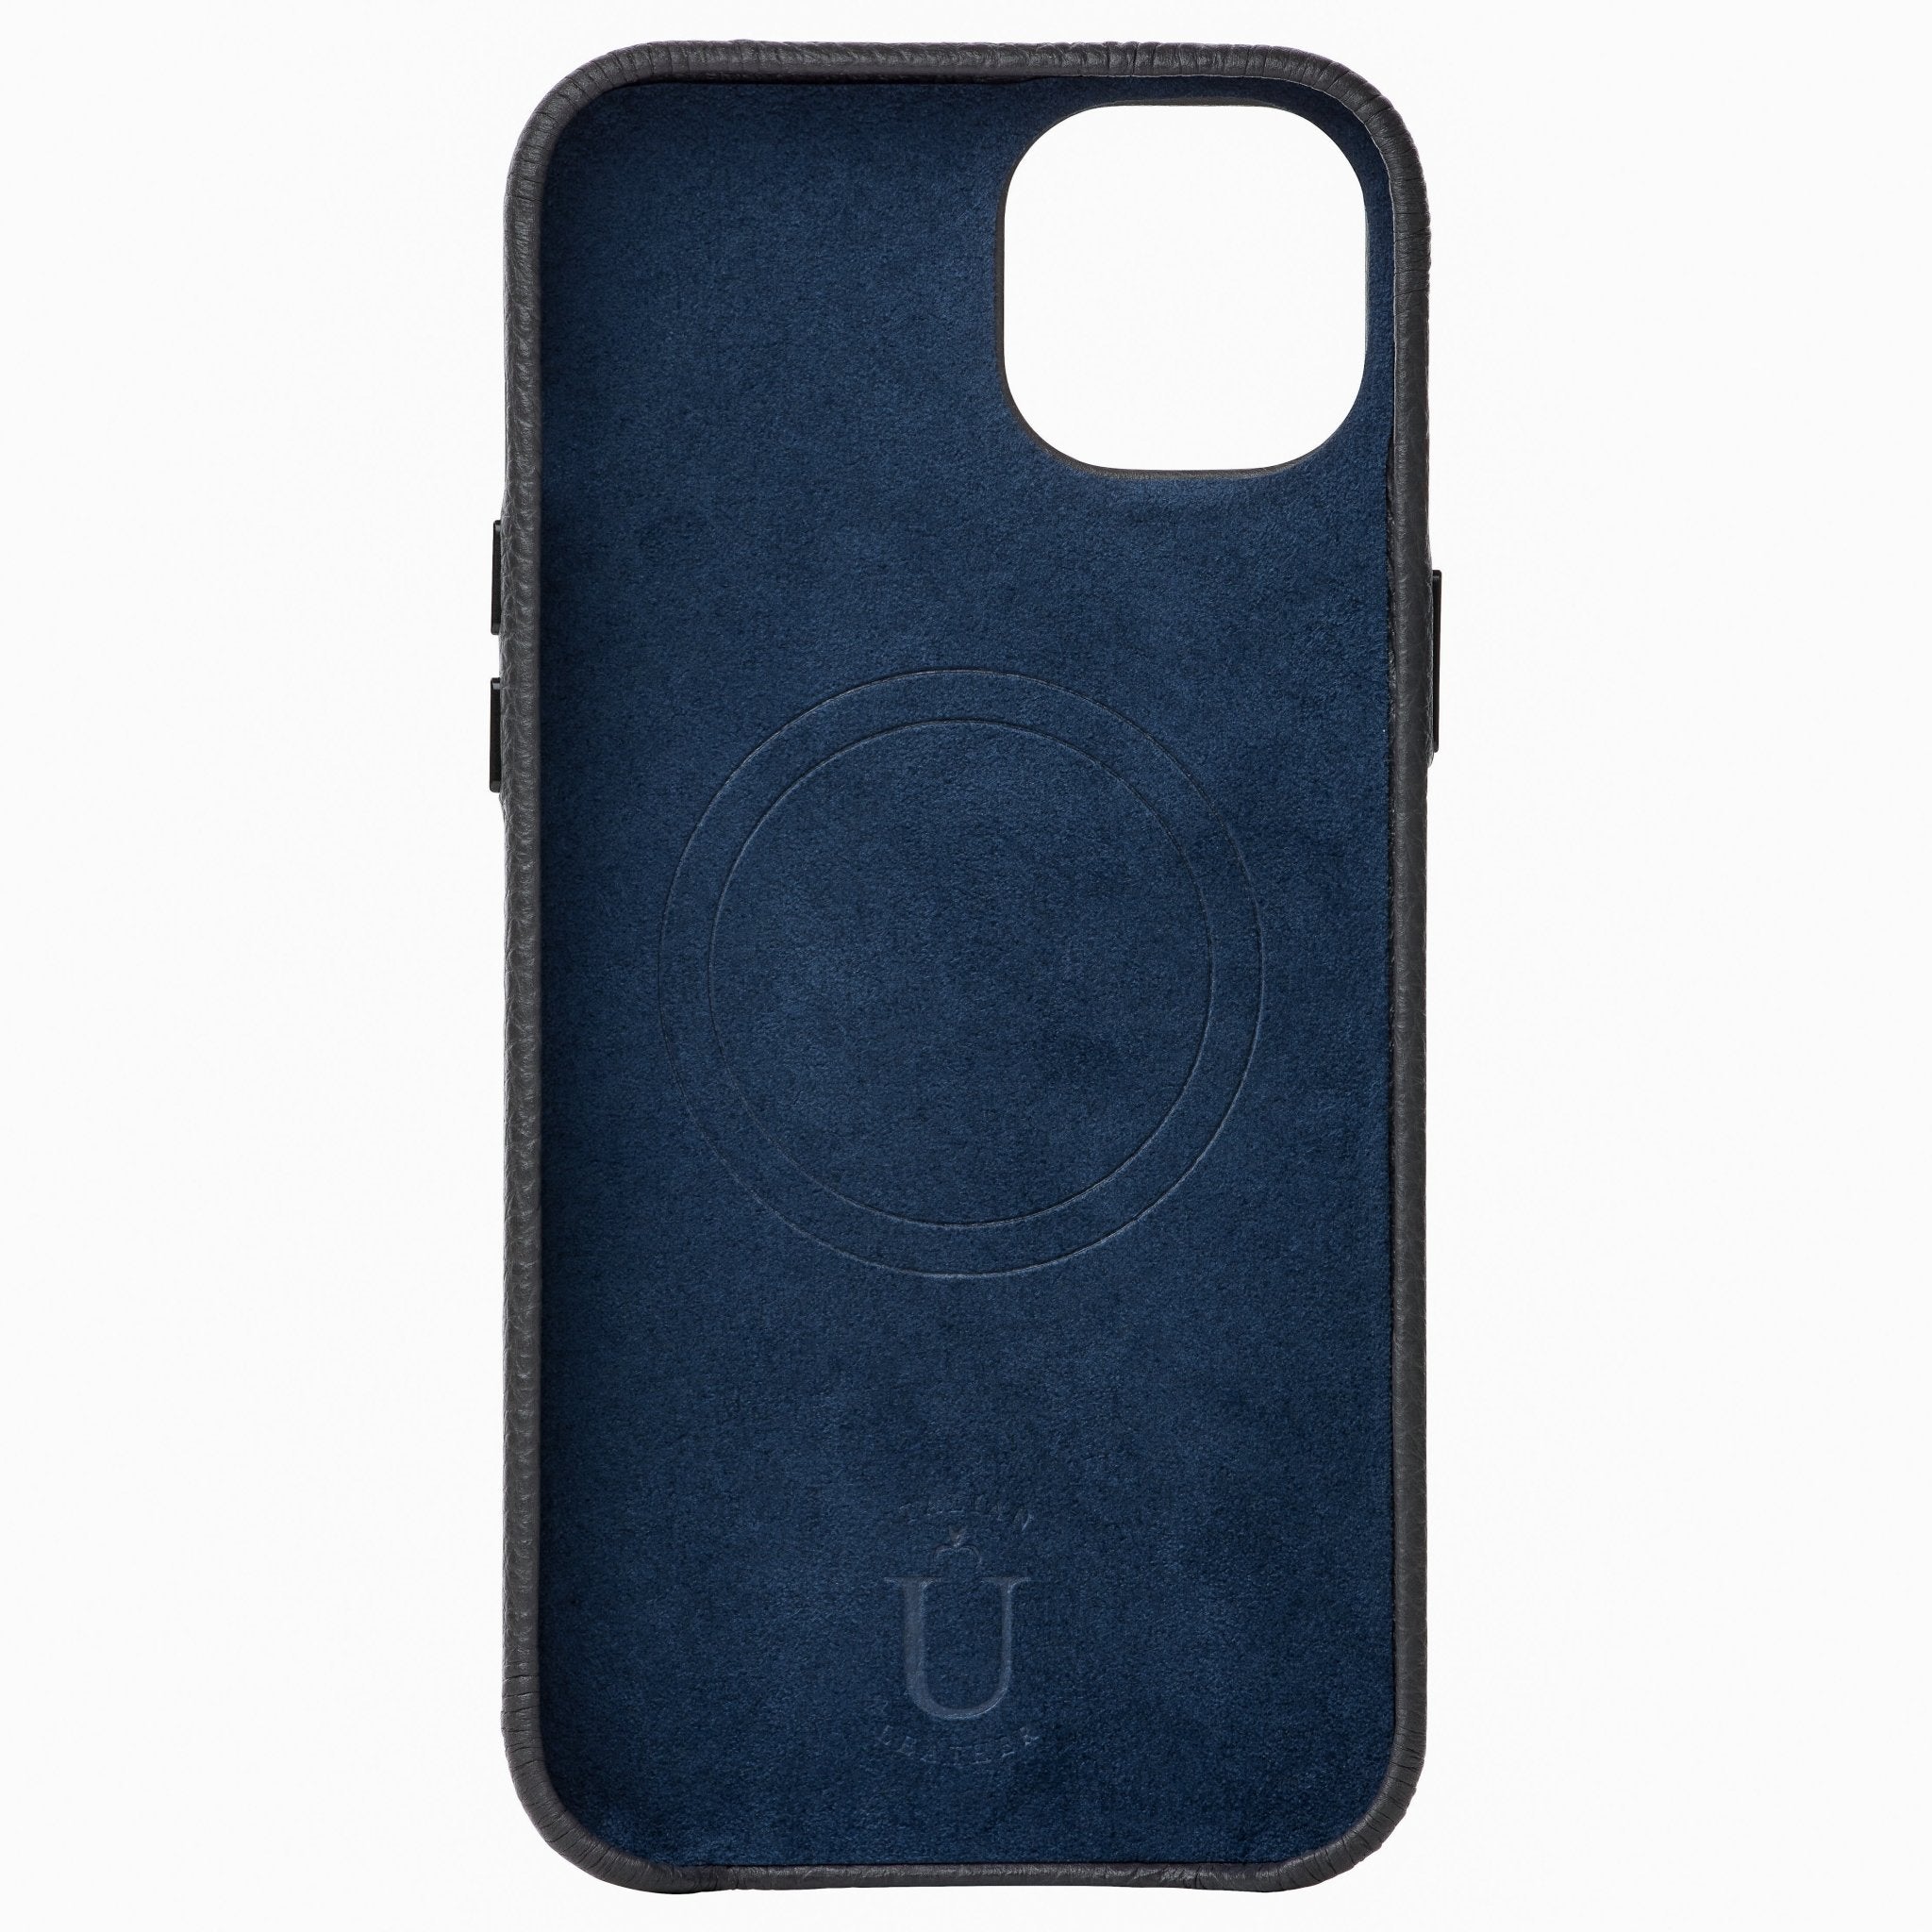 Ubique Italy Luxury iPhone Case 14 Pebble Grain Leather Storm Grey Inner Lining